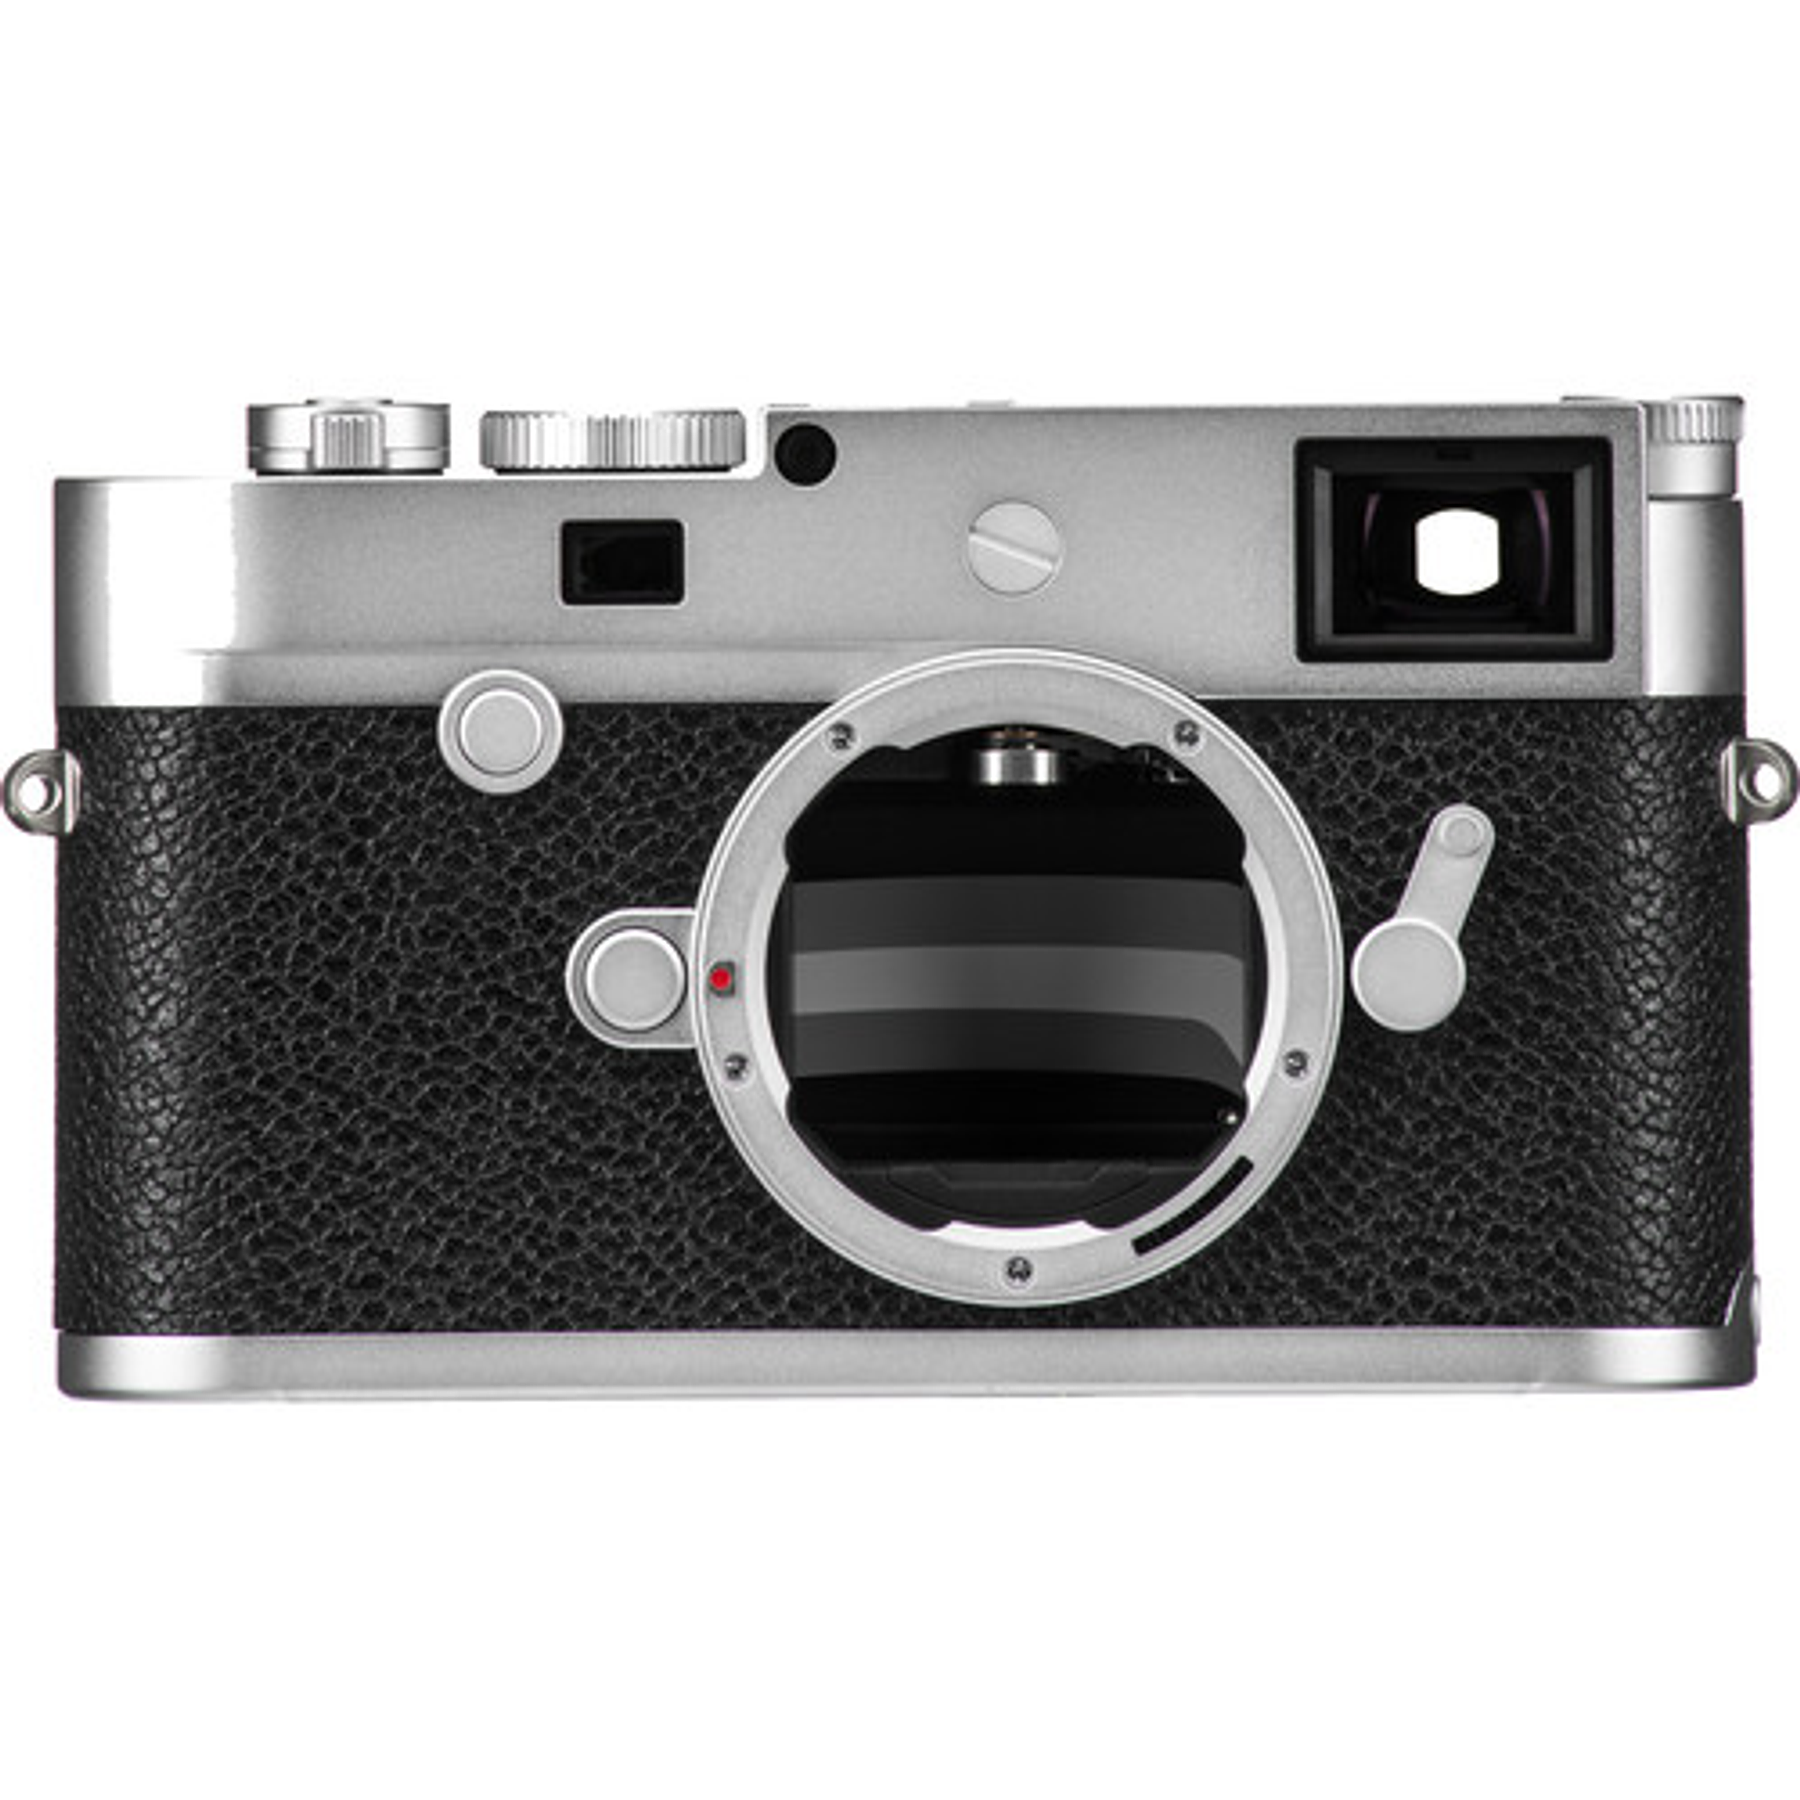 Leica M10-P Digital Rangefinder (Silver Chrome)